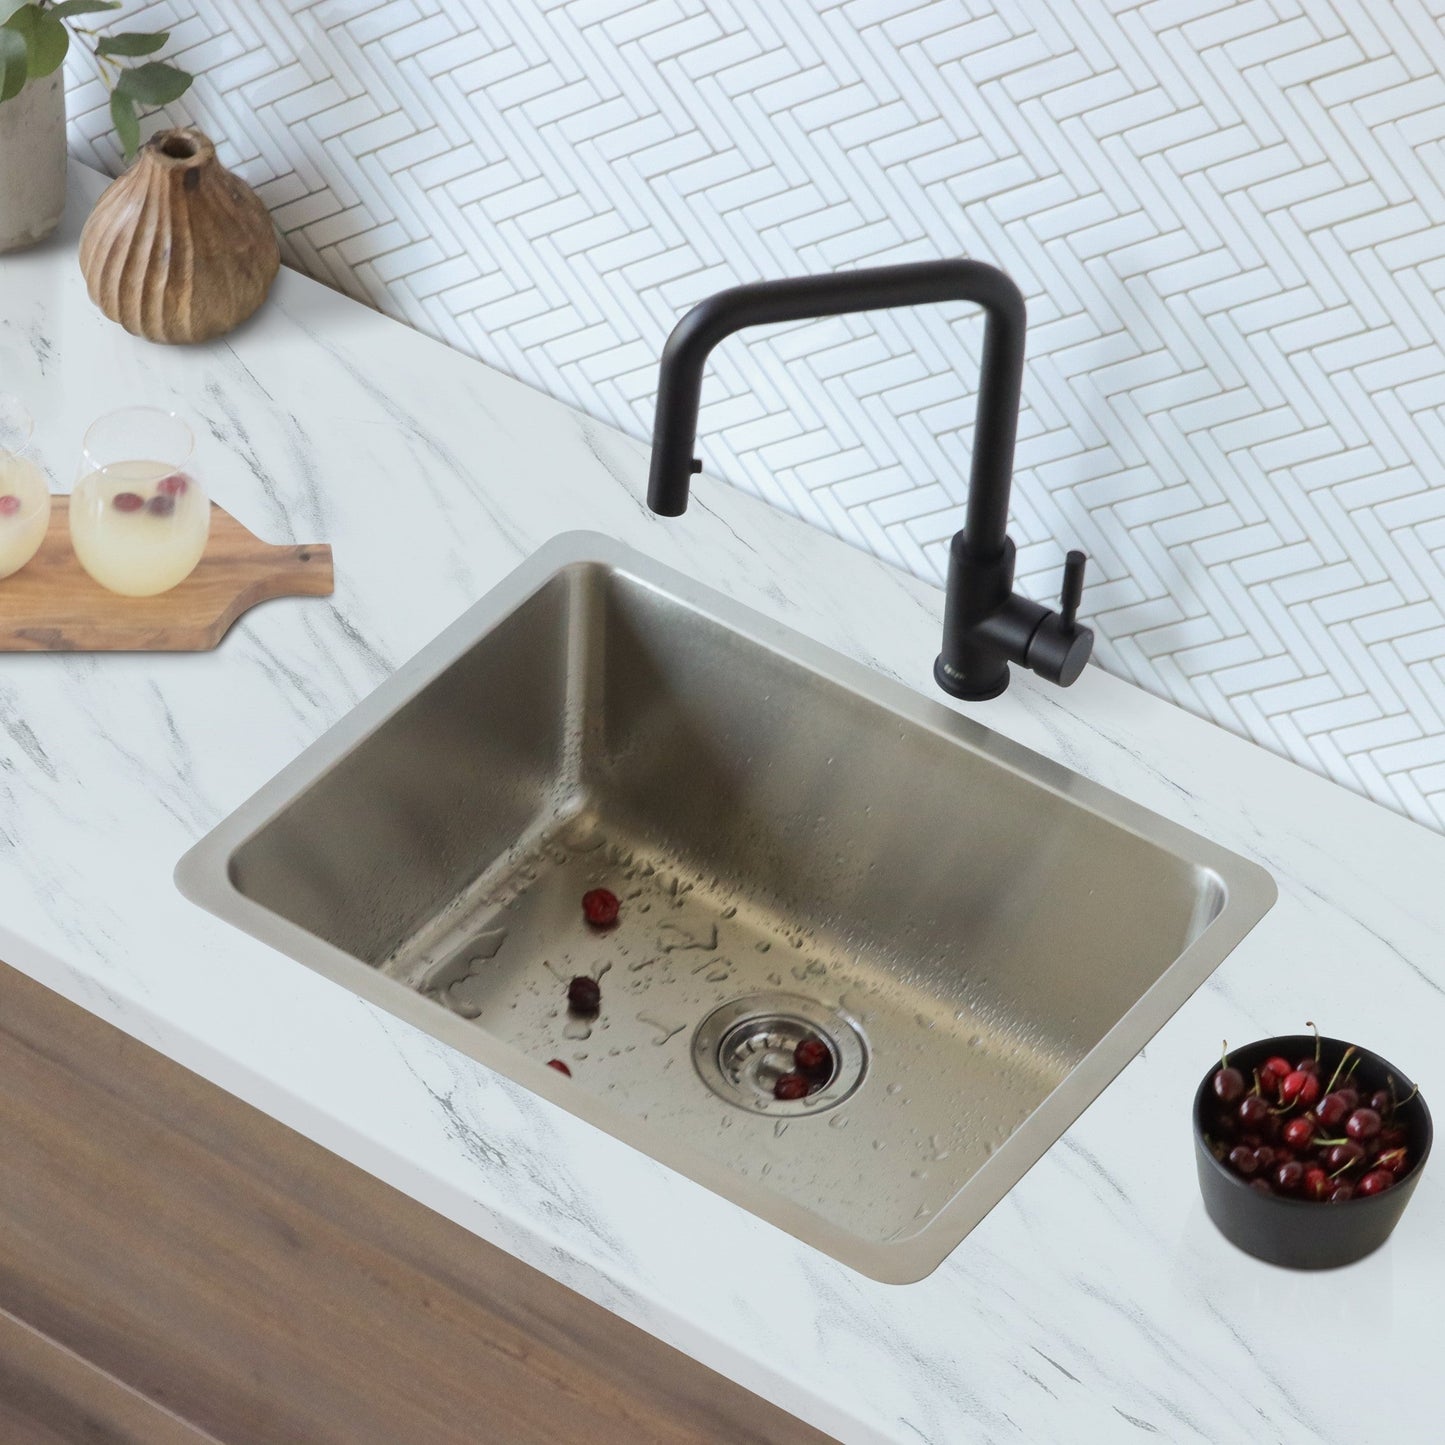 Stylish GARNET 23" Single Bowl Undermount and Drop-in Stainless Steel Kitchen Sink